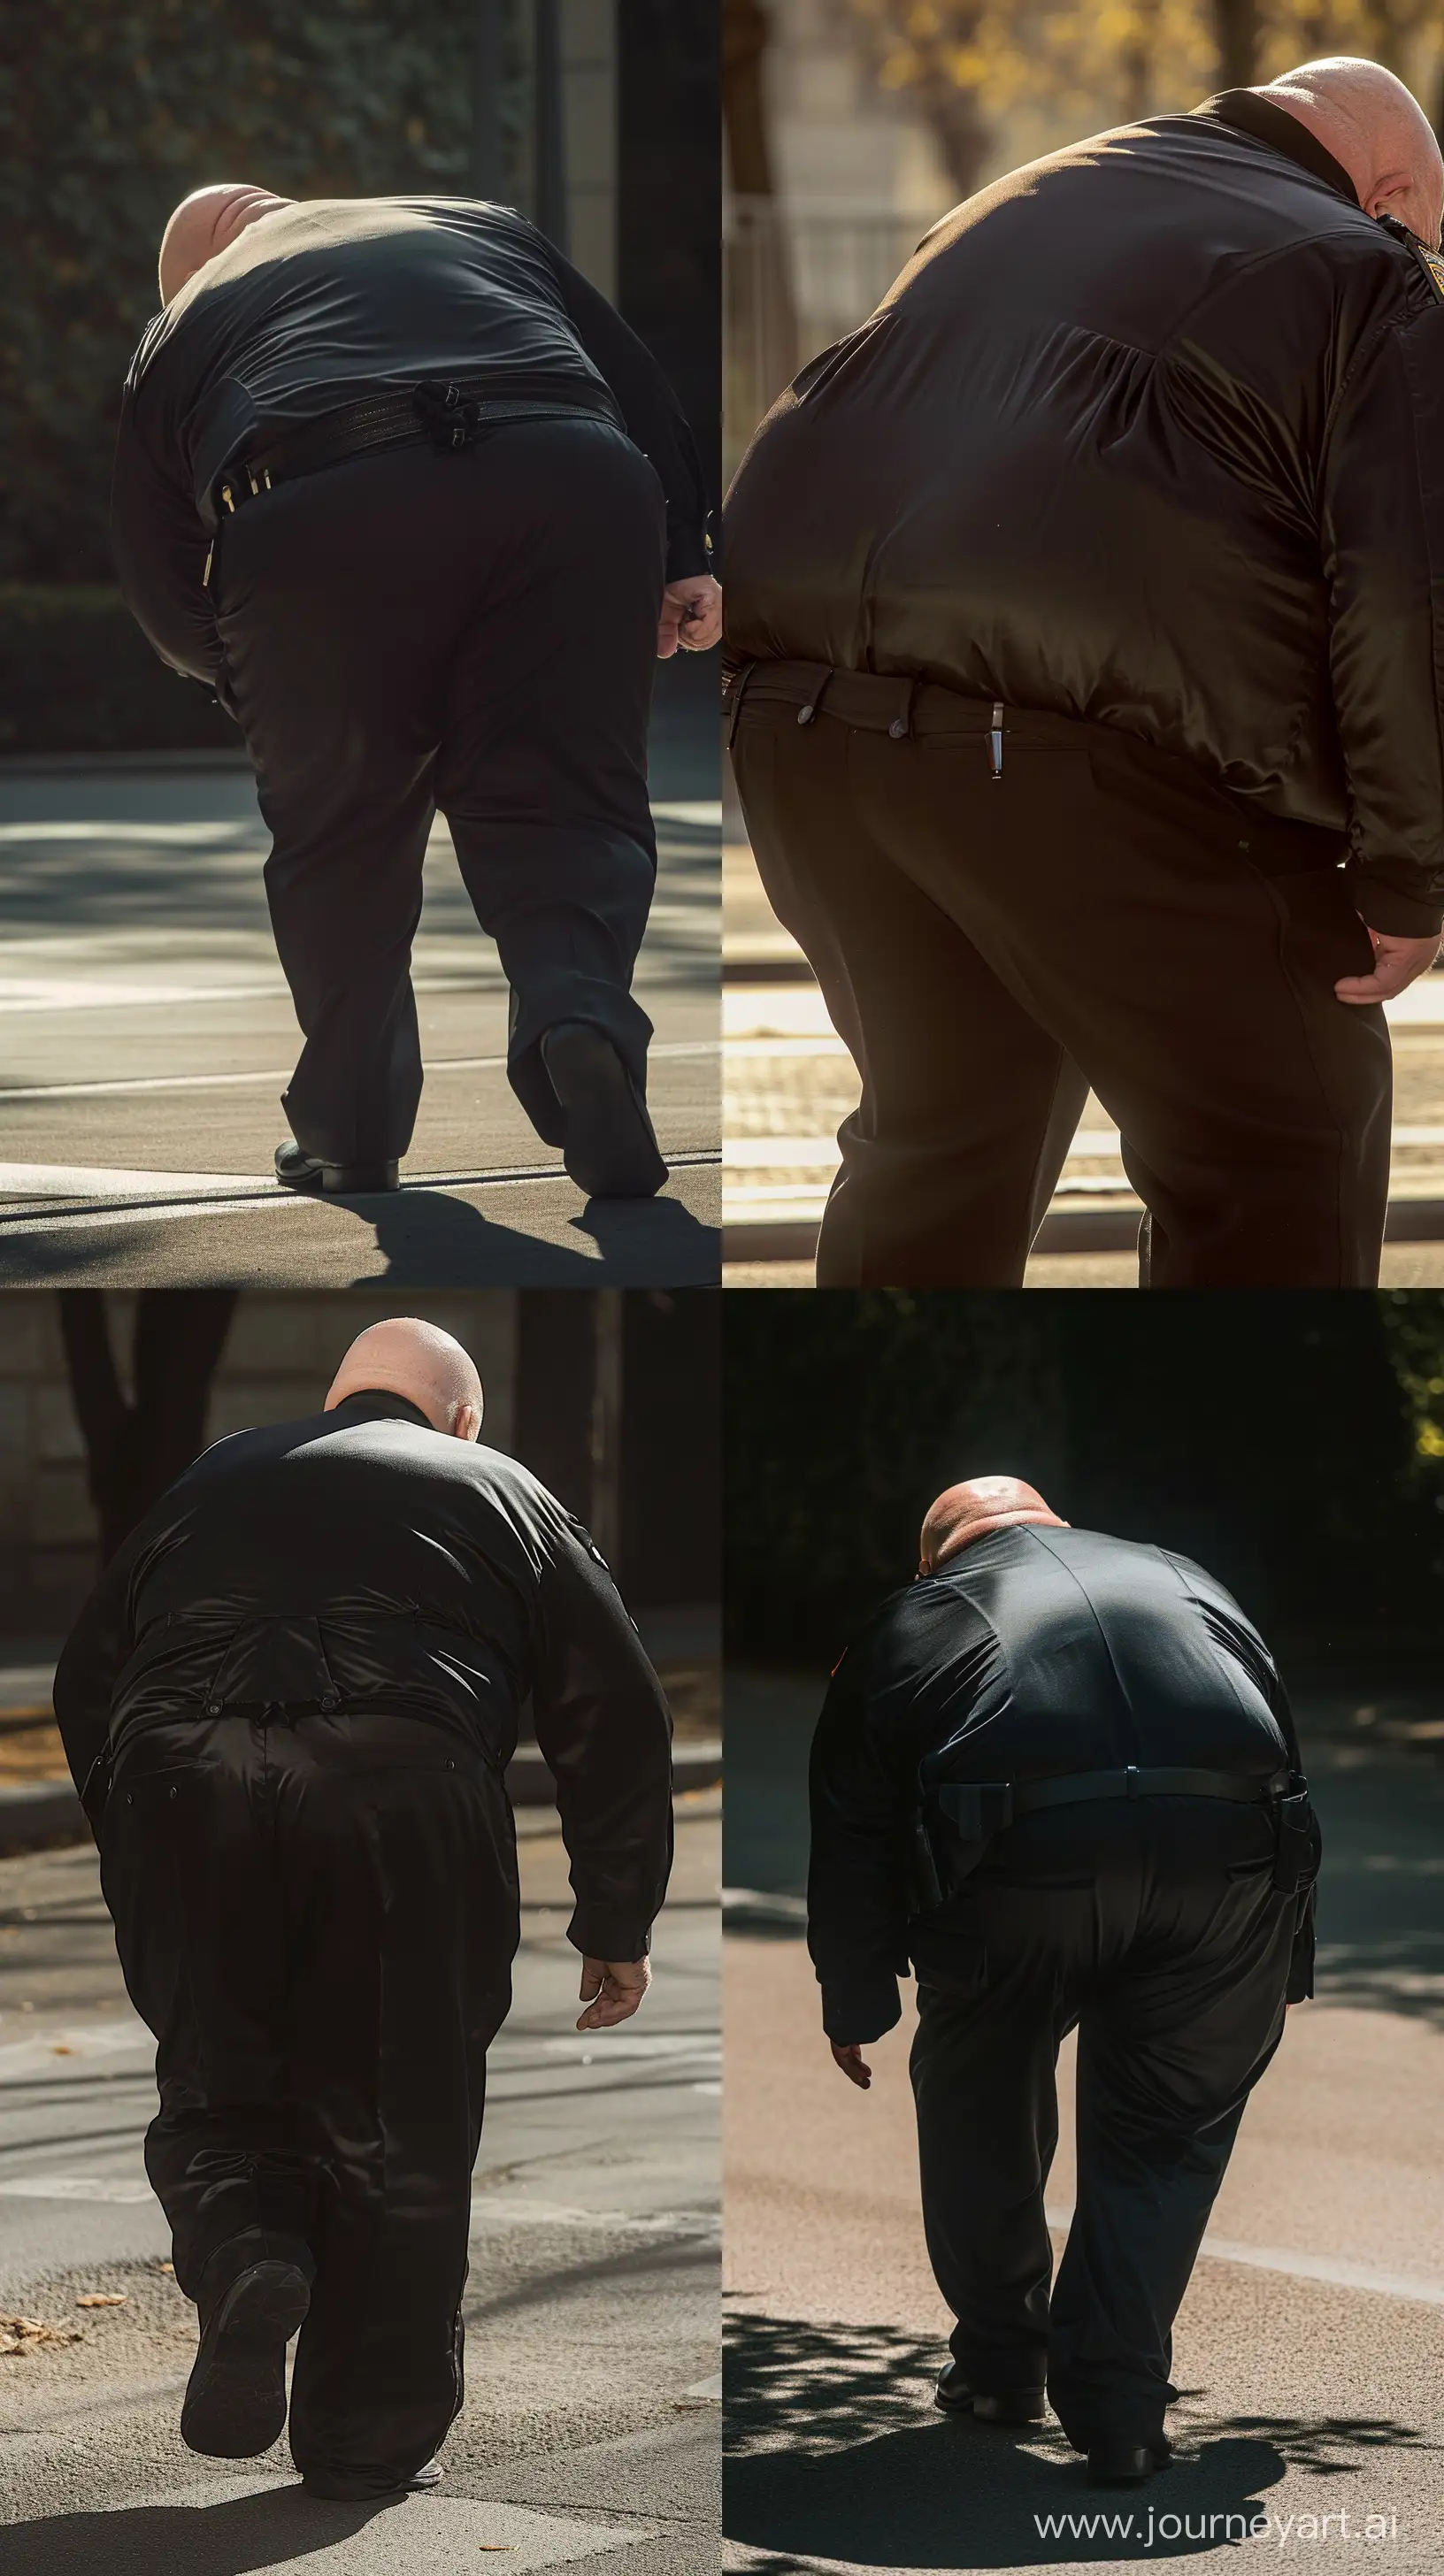 Elderly-Gentleman-in-Stylish-French-Police-Uniform-Enjoys-Sunlight